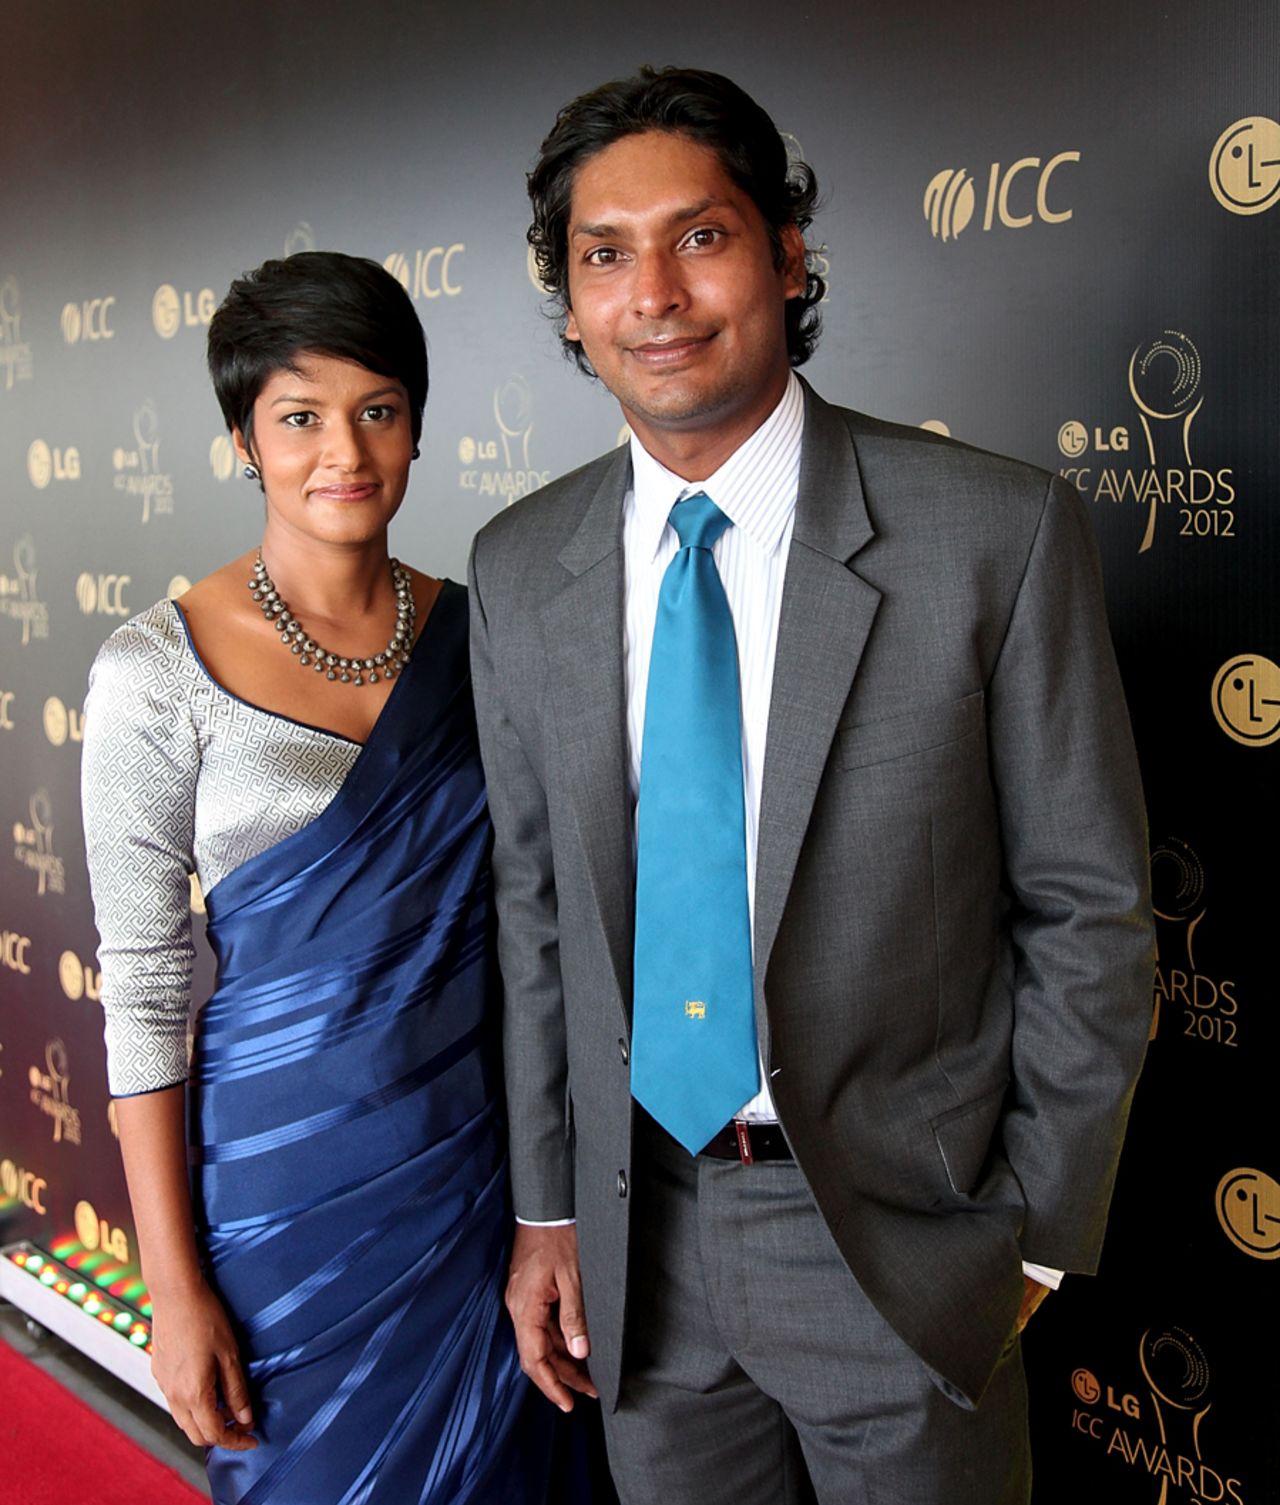 Kumar Sangakkara with his wife Yehali at the ICC awards, Colombo, September 15, 2012